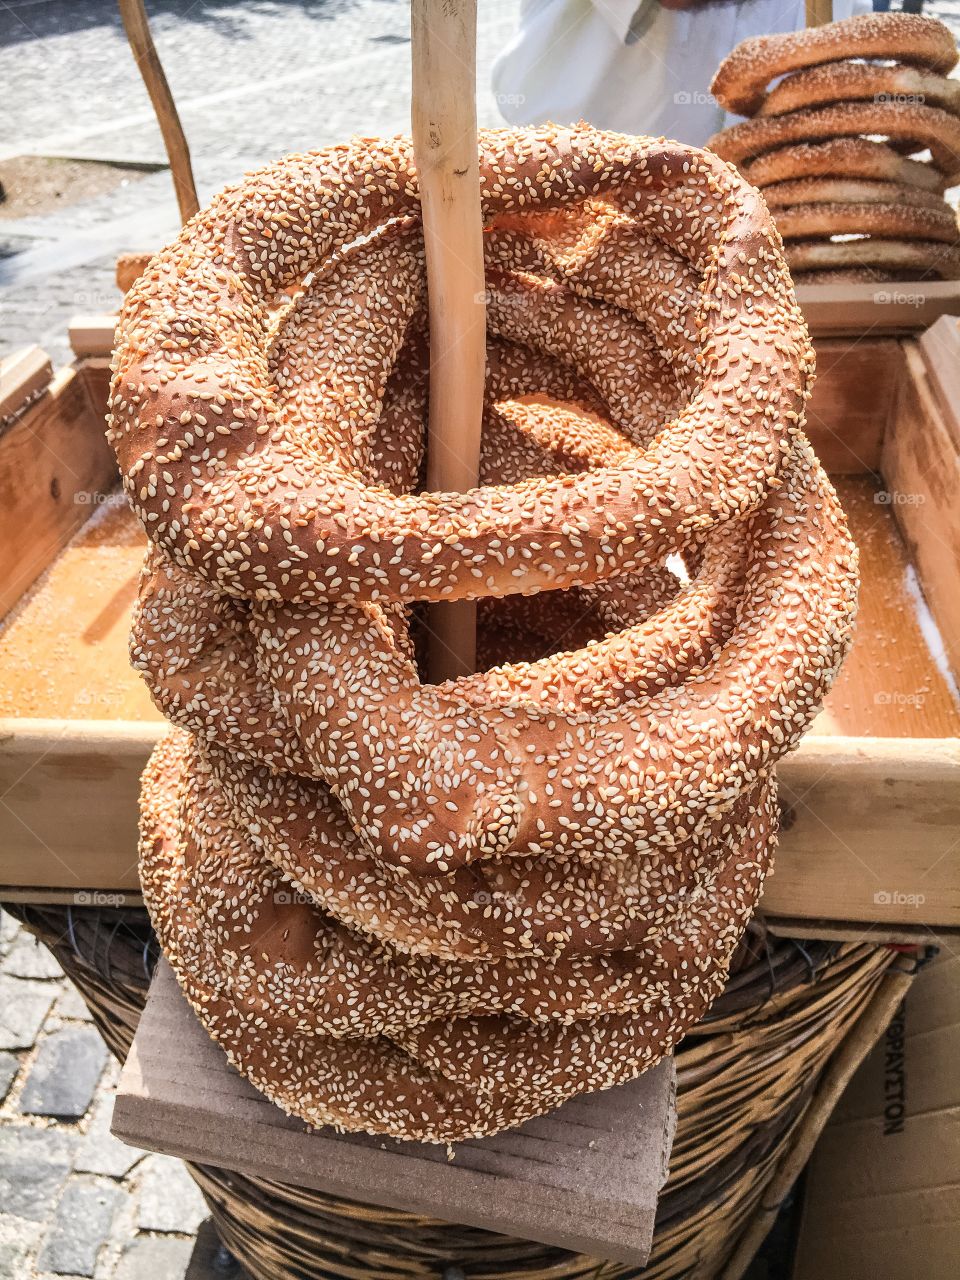 Street pretzels 